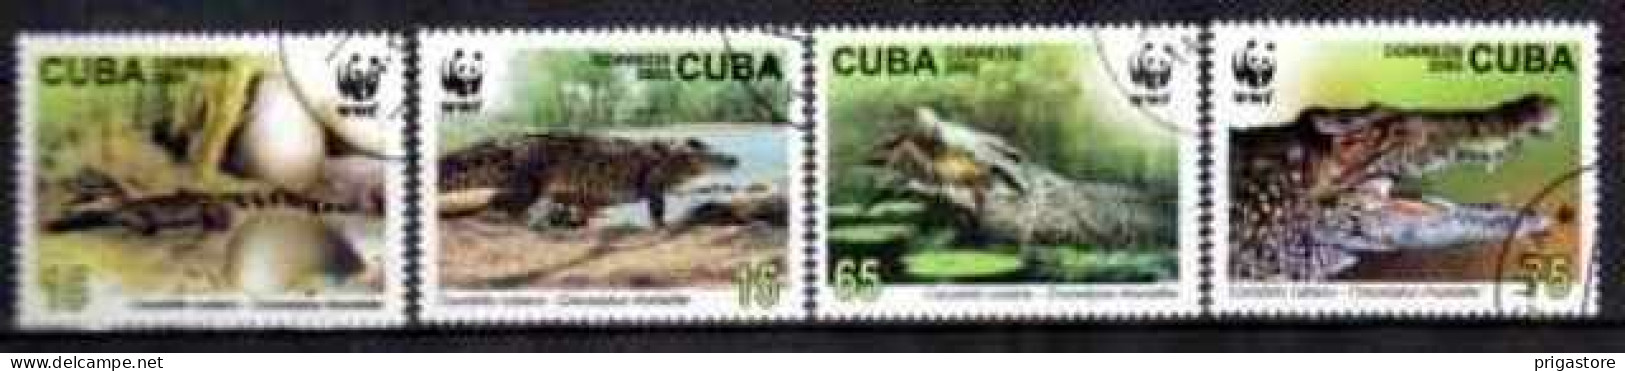 Cuba 2003 Animaux Crocodiles (19) Yvert N° 4117 à 4120 Oblitéré Used - Usati